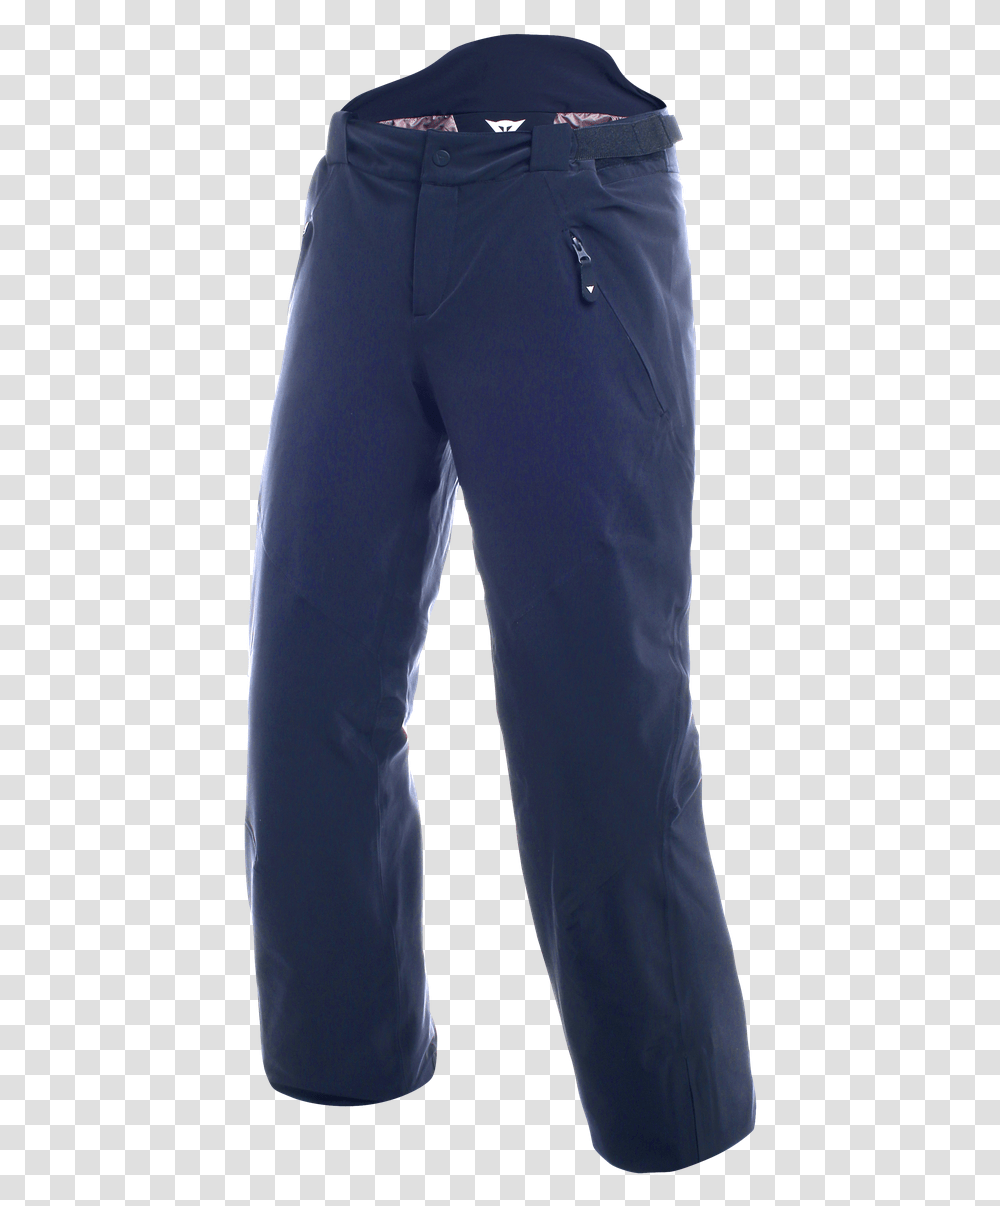 Dainese Hp2 P M1 Dainese Lyzarske Kalhoty Panske, Pants, Clothing, Apparel, Jeans Transparent Png